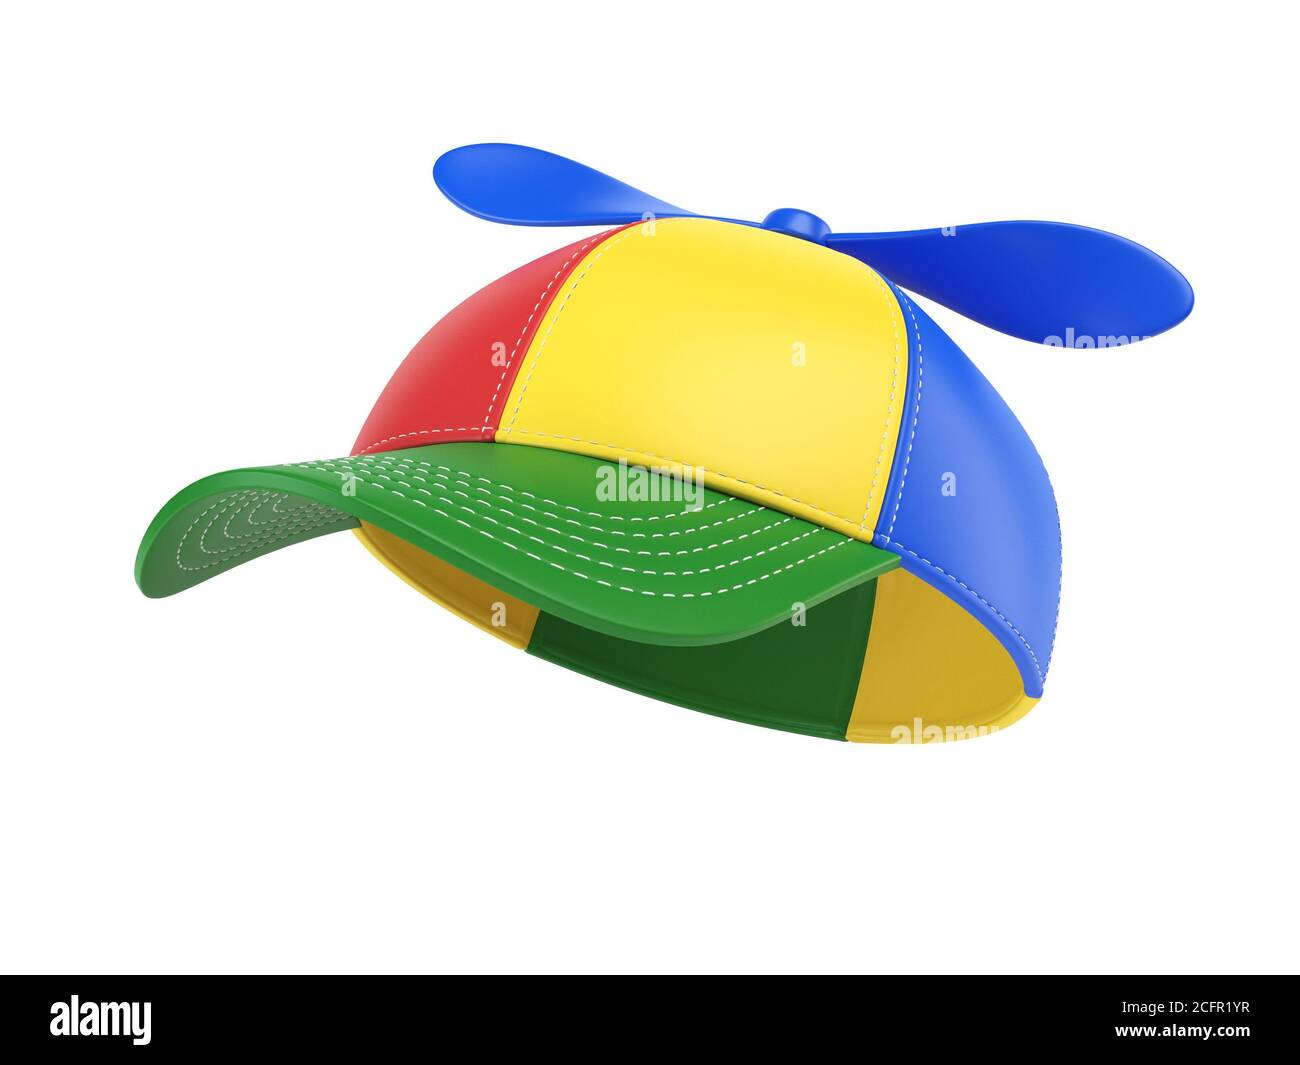 Kindermütze mit Propeller, farbenfroher Hut, 3d-Rendering Stockfotografie -  Alamy